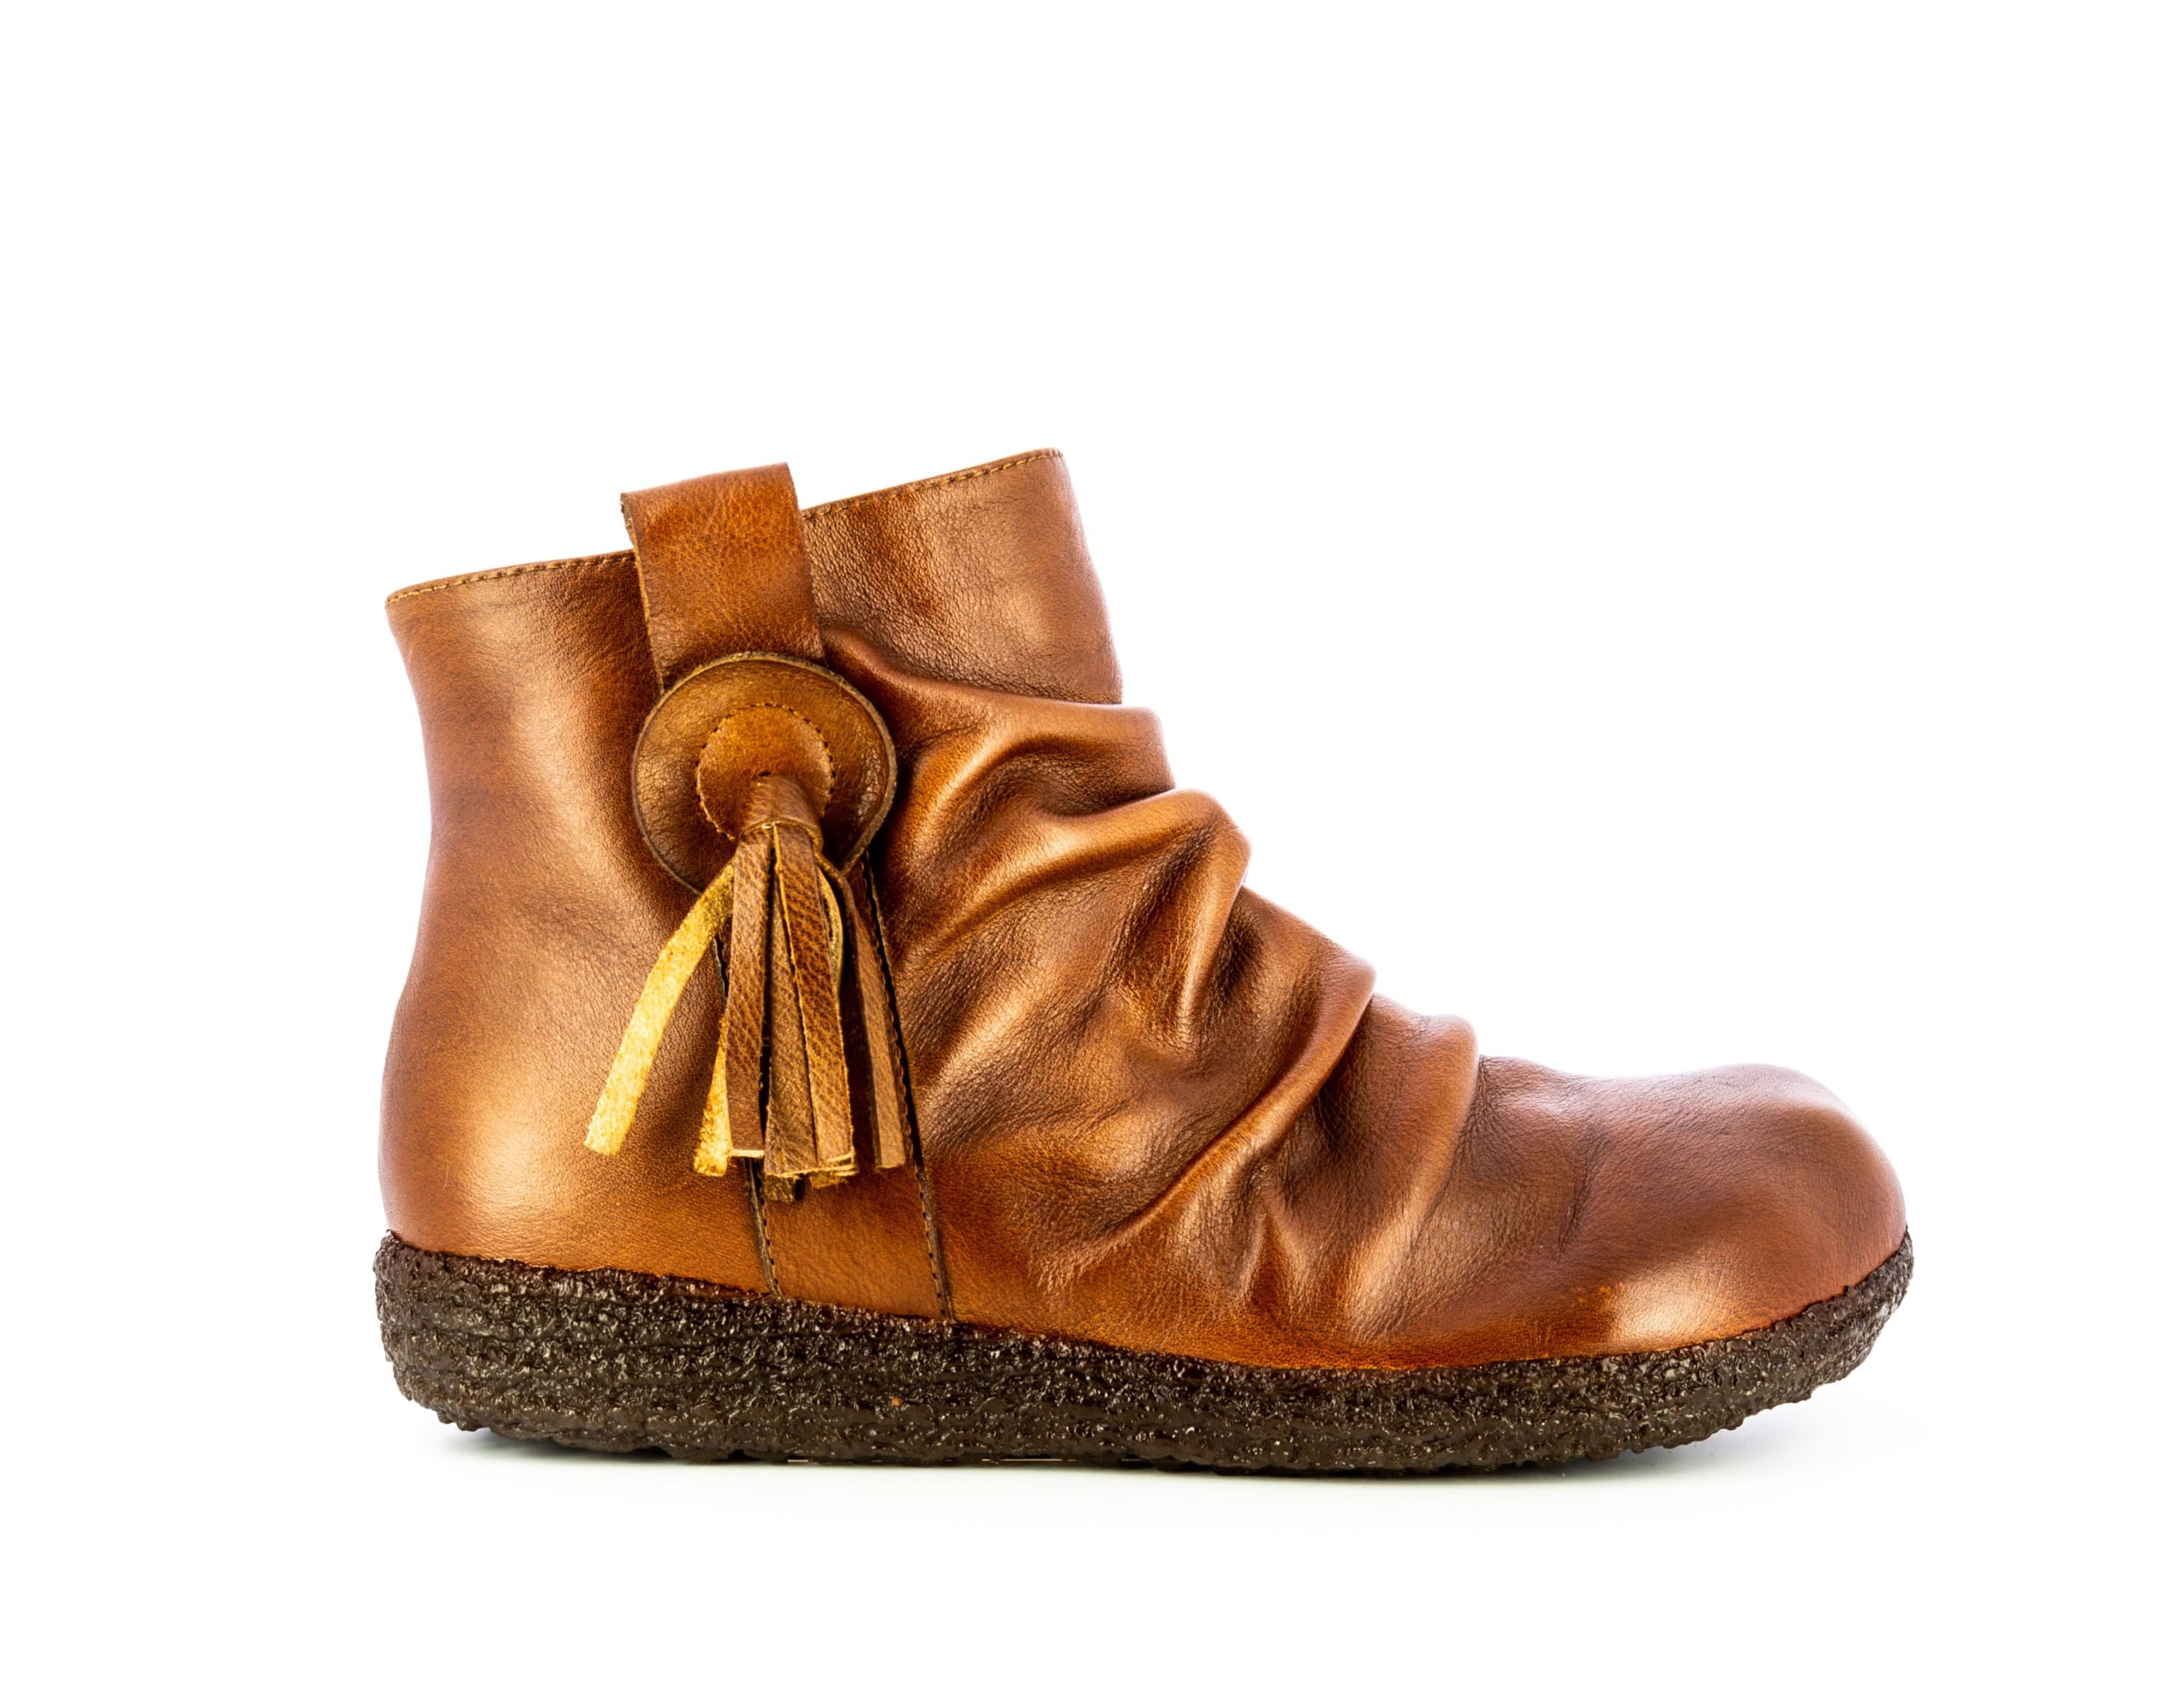 GOCNO 185 - 35 / Camel - Boots